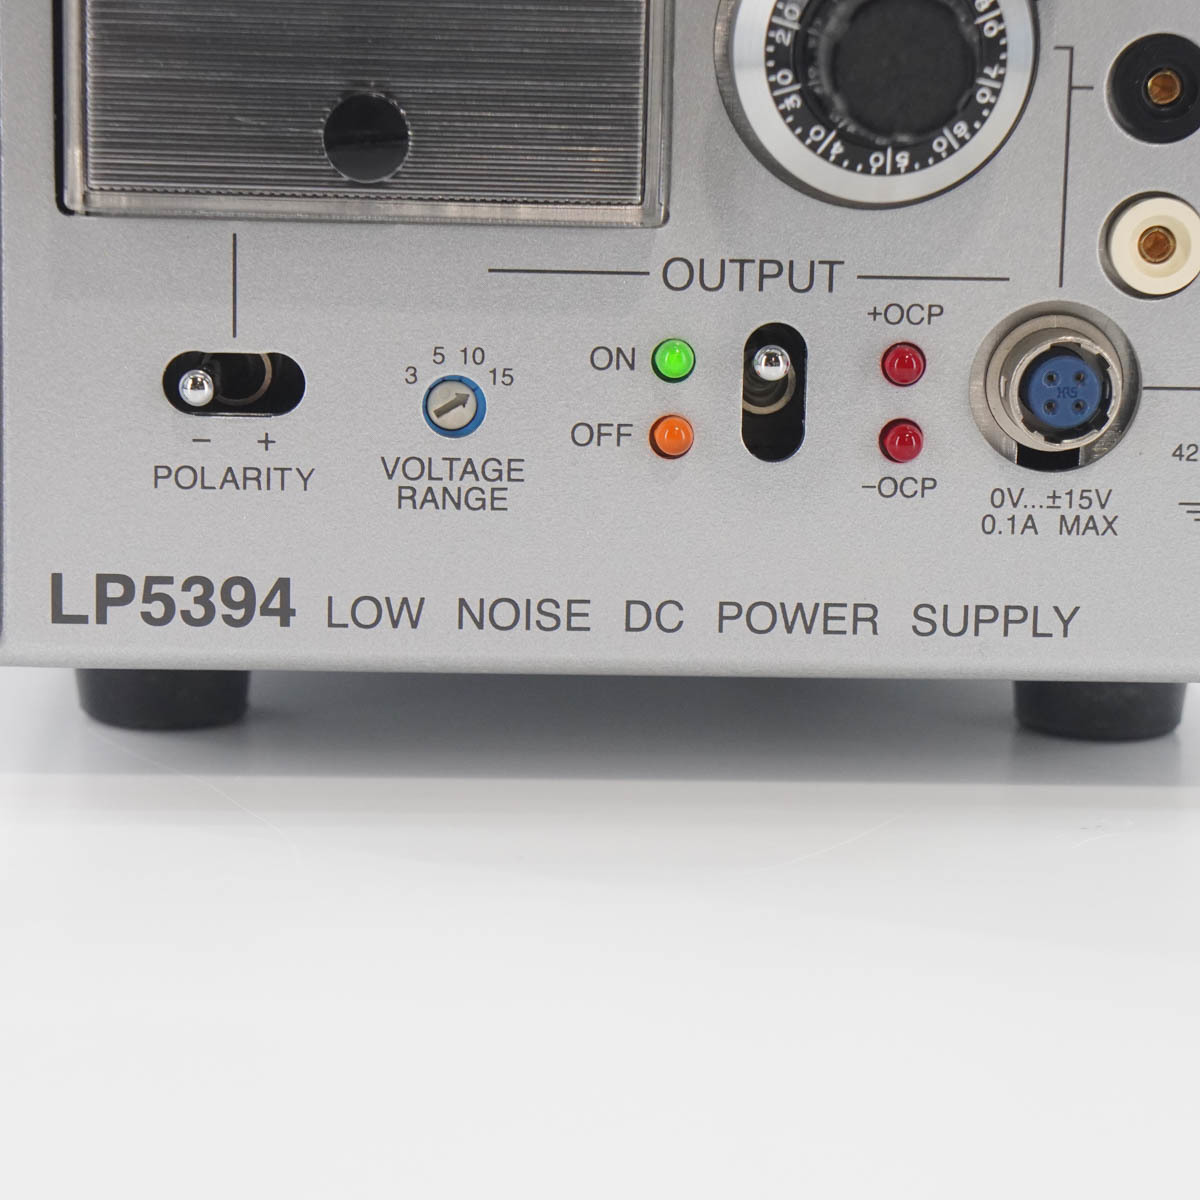 DW] 8日保証 LP5394 NF PA-001-2591 エヌエフ回路設計ブロック LOW